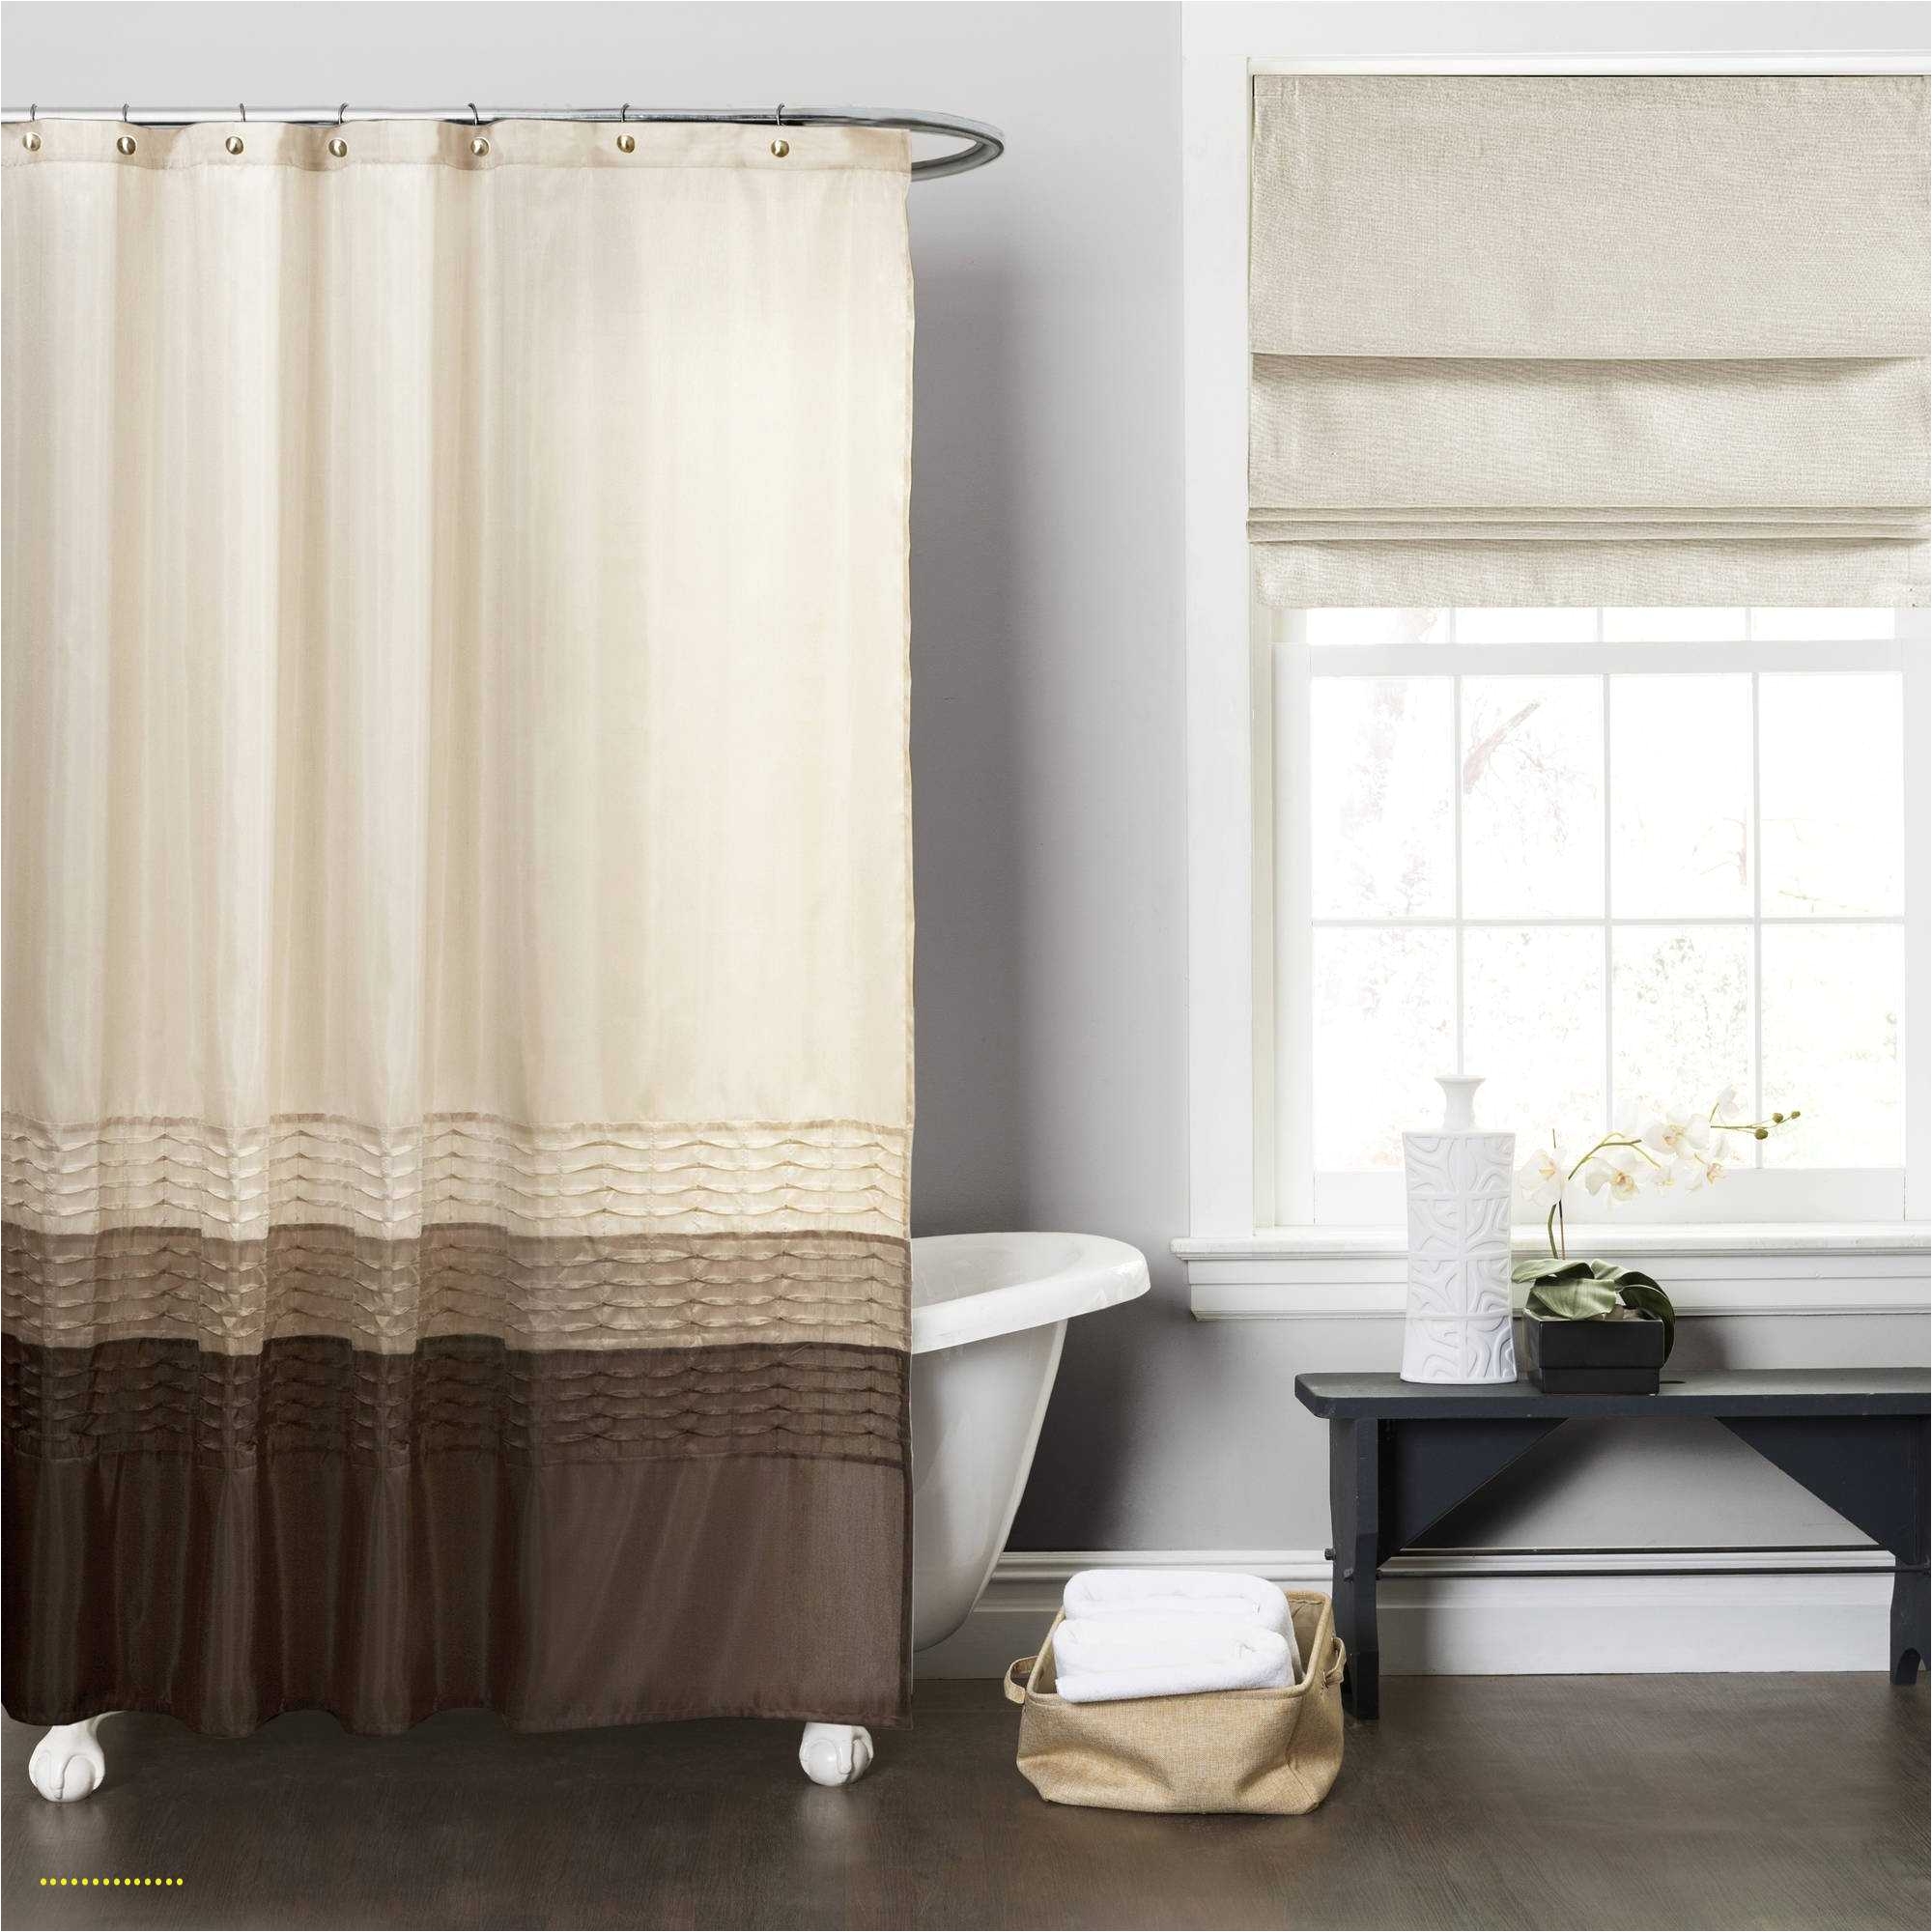 Outstanding Dillards Shower Curtains Fresh Furniture High End 0d Design Bathroom Shower and Window Curtain